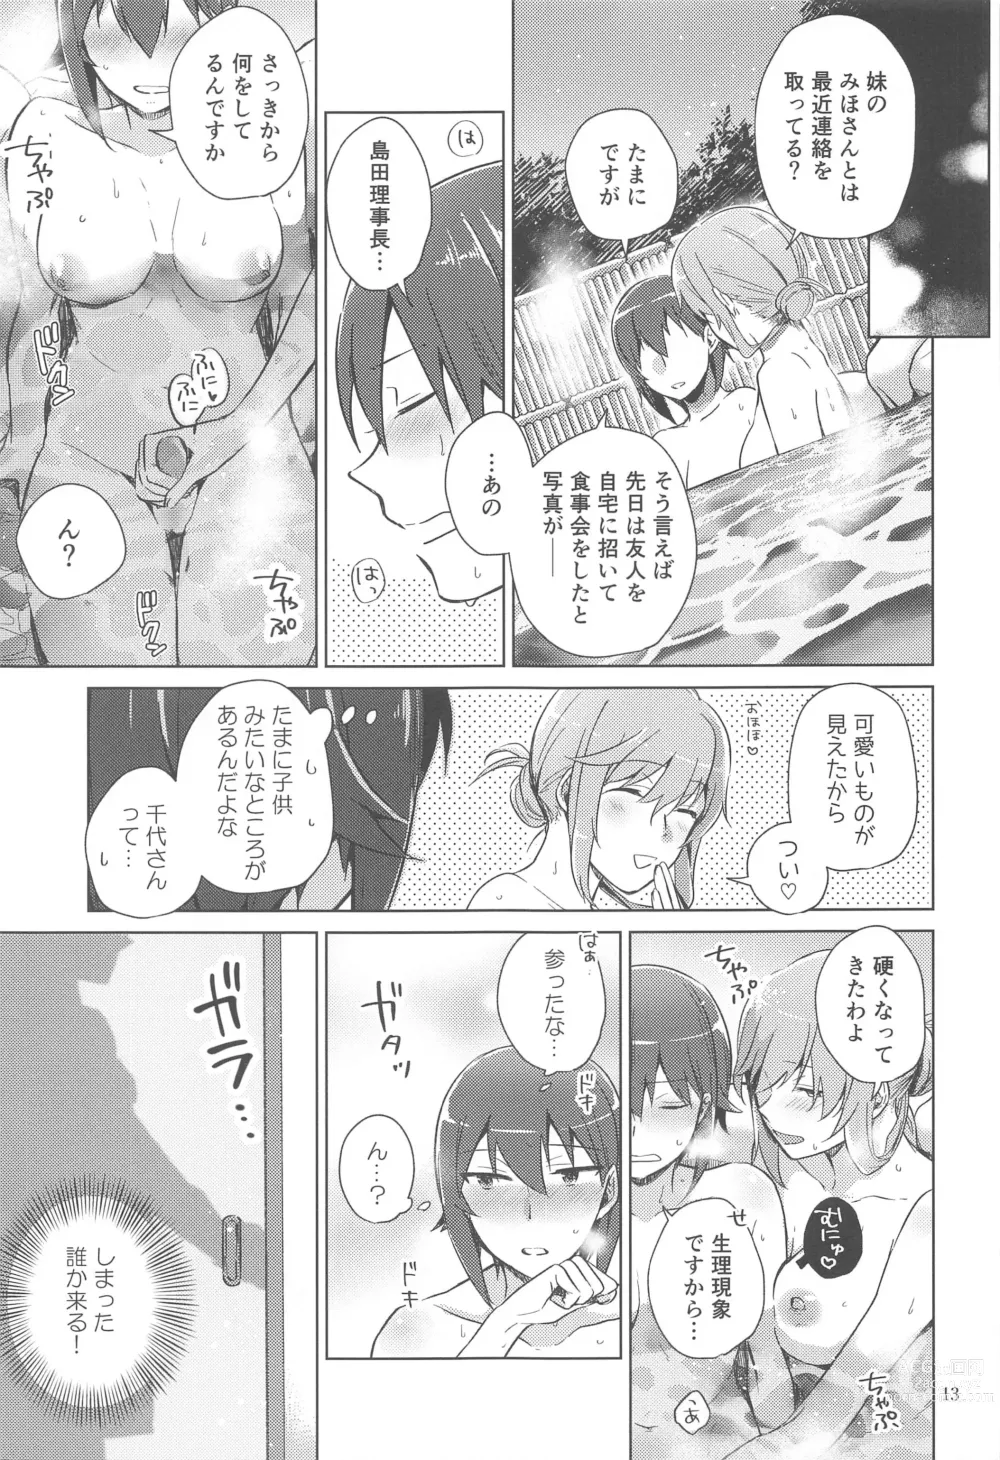 Page 12 of doujinshi Nishizumi to Shimada 2